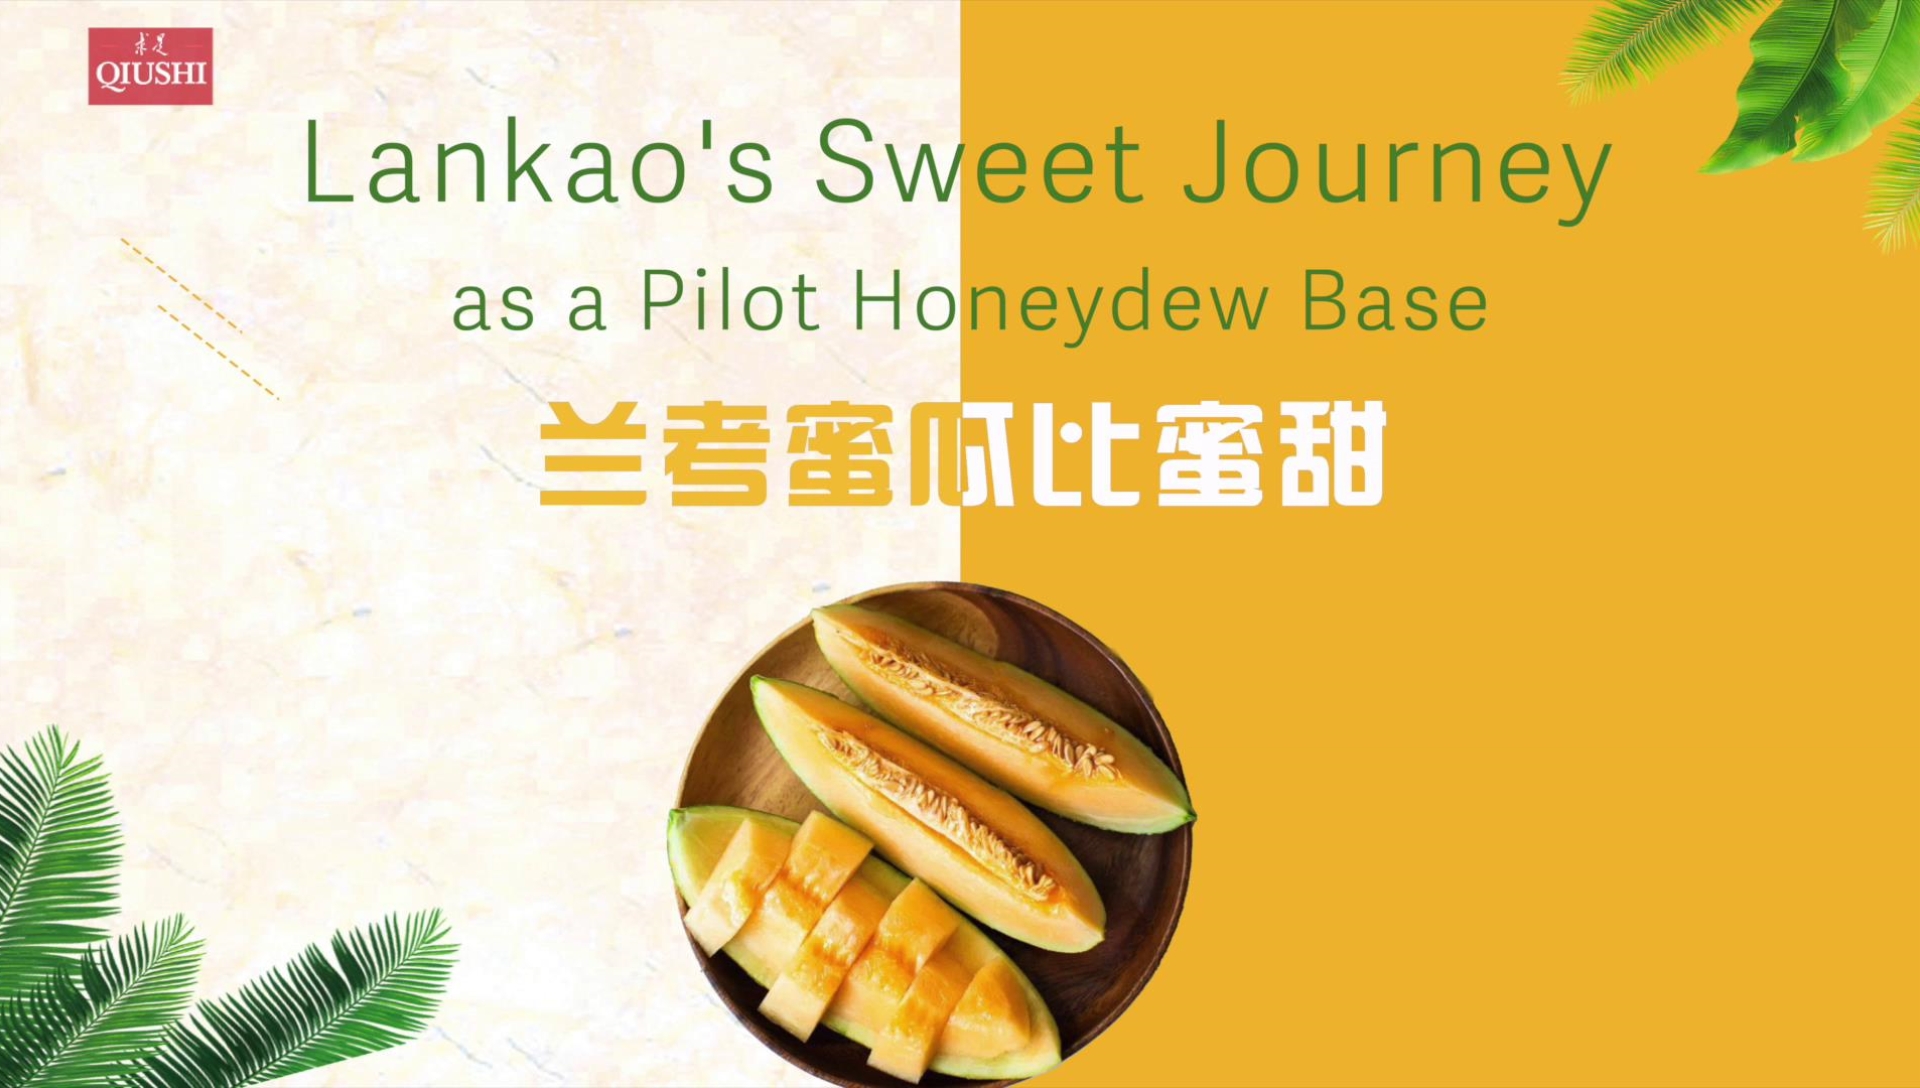 Lankao’s Sweet Journey as a Pilot Honeydew Base